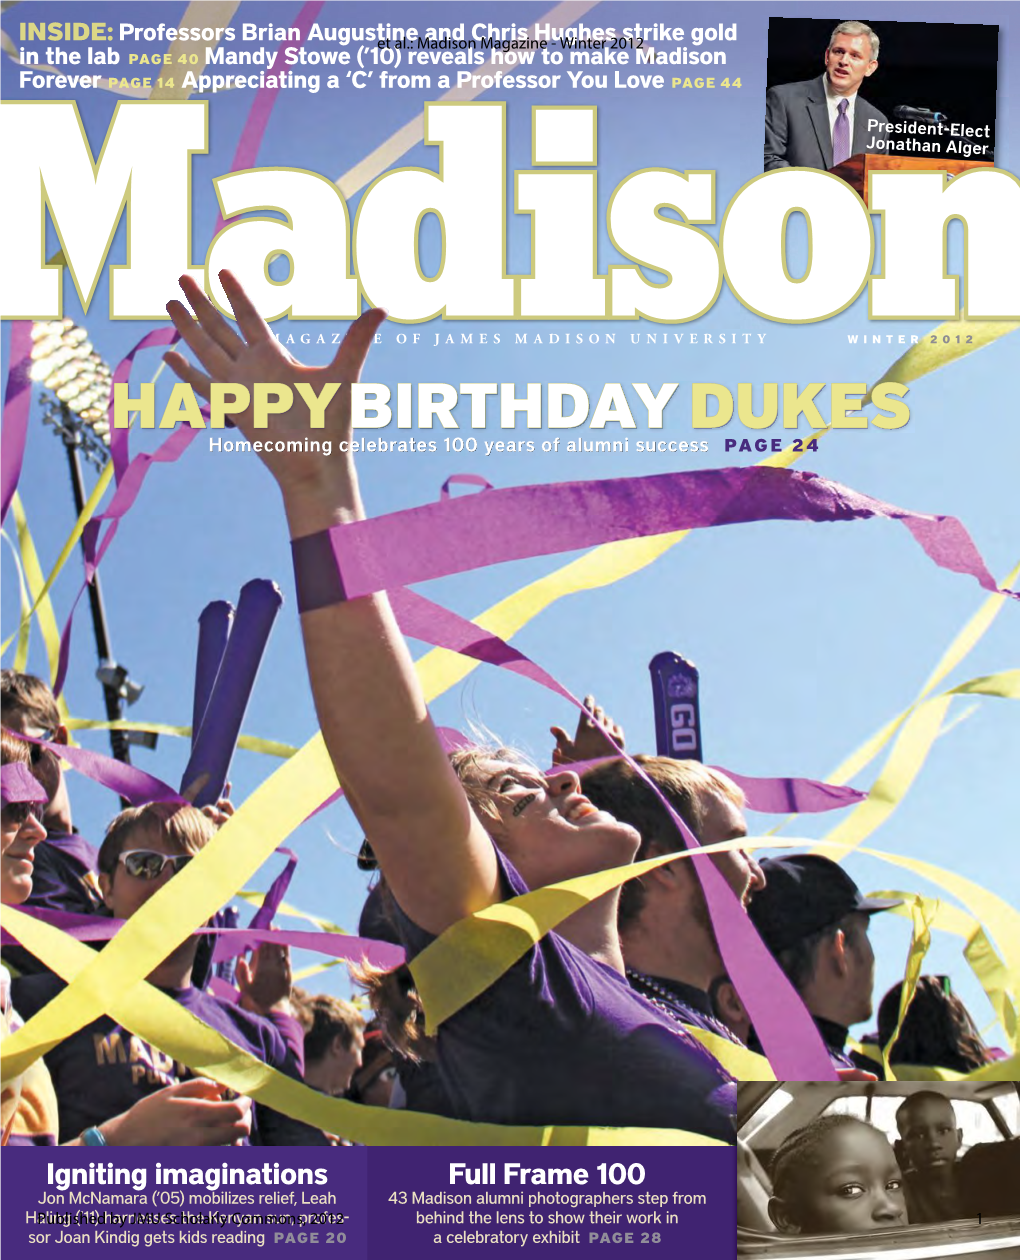 Madison Magazine, Vol. 35, No. 1, Winter 2012